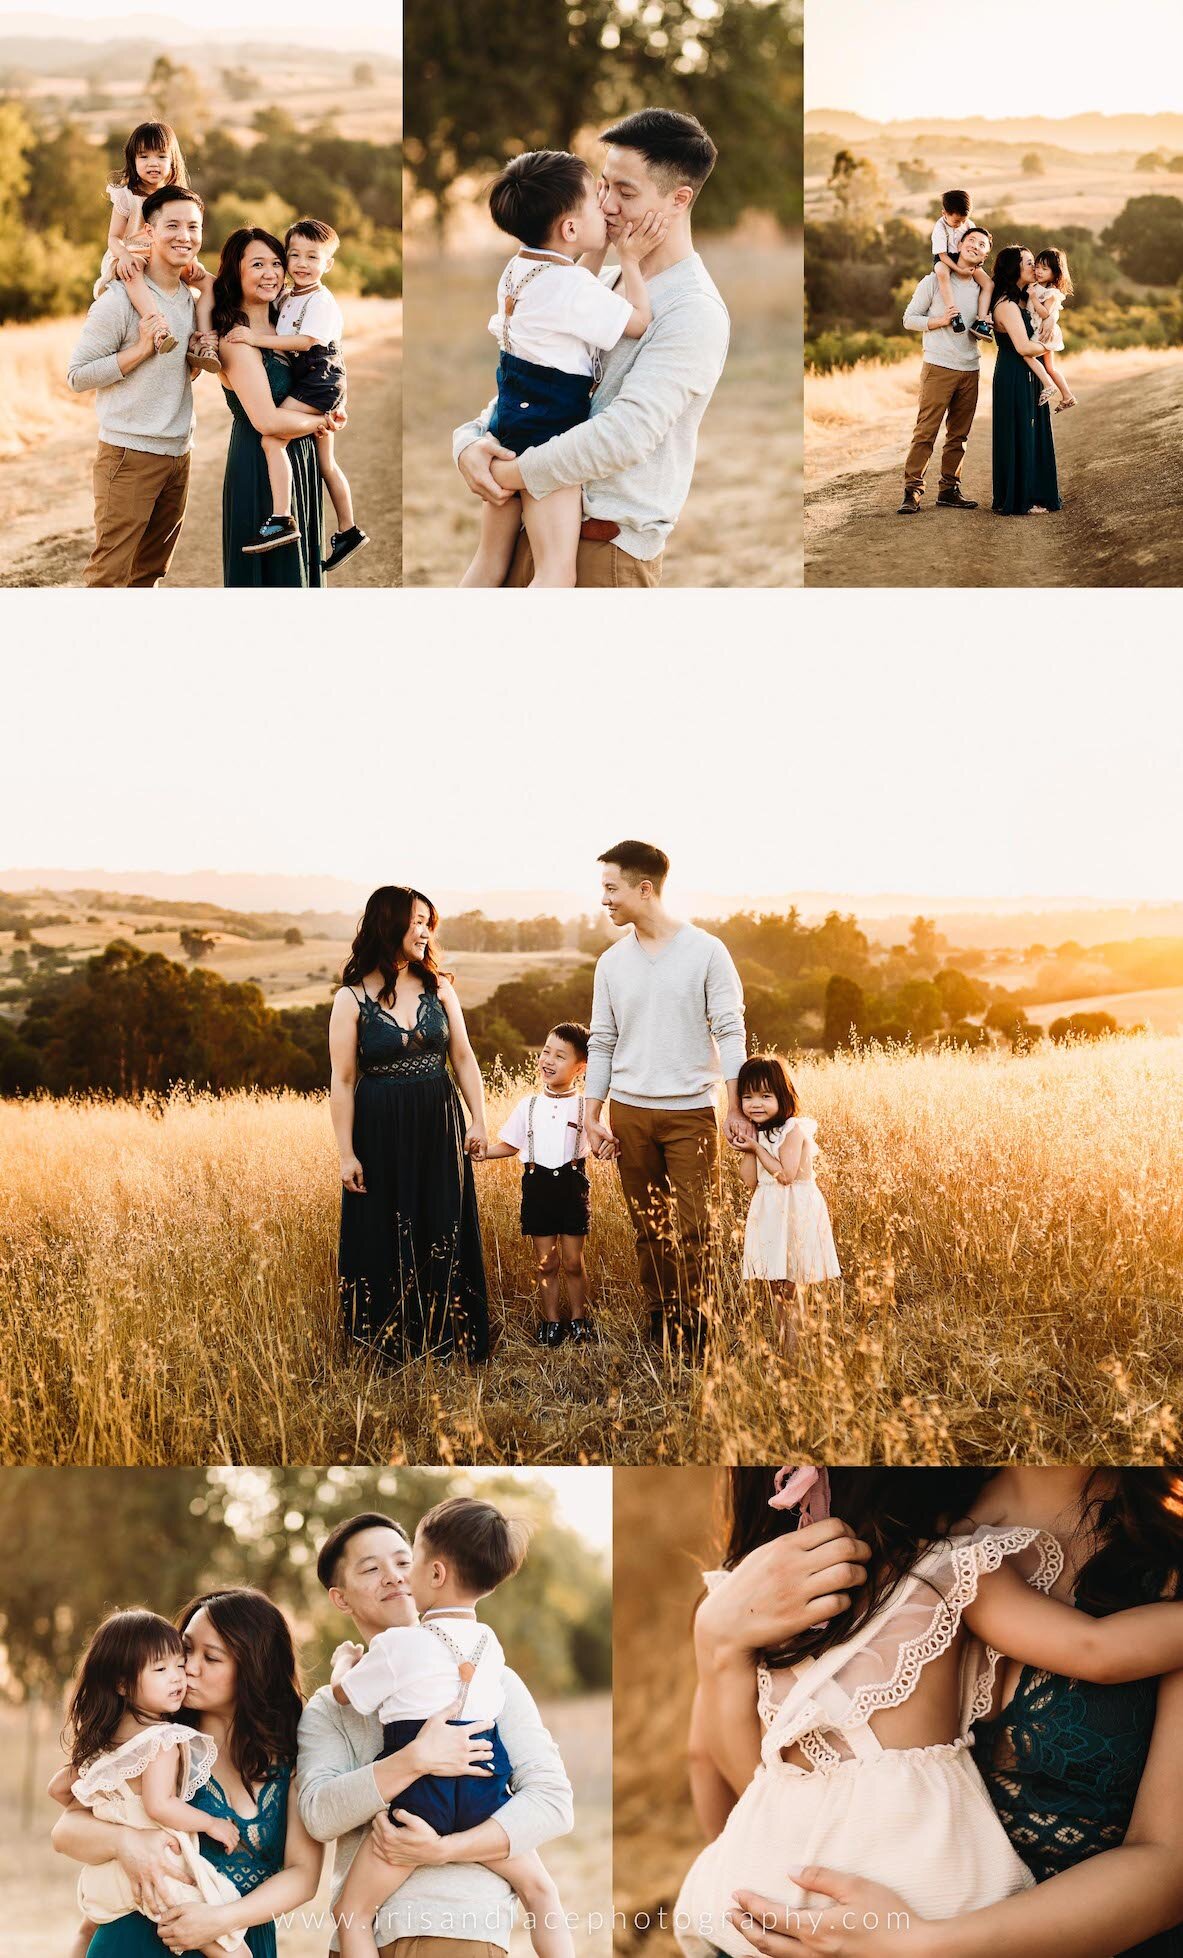 Palo Alto Photographer  |  Fall Lifestyle Family Photos  |  Iris and Lace Photography 